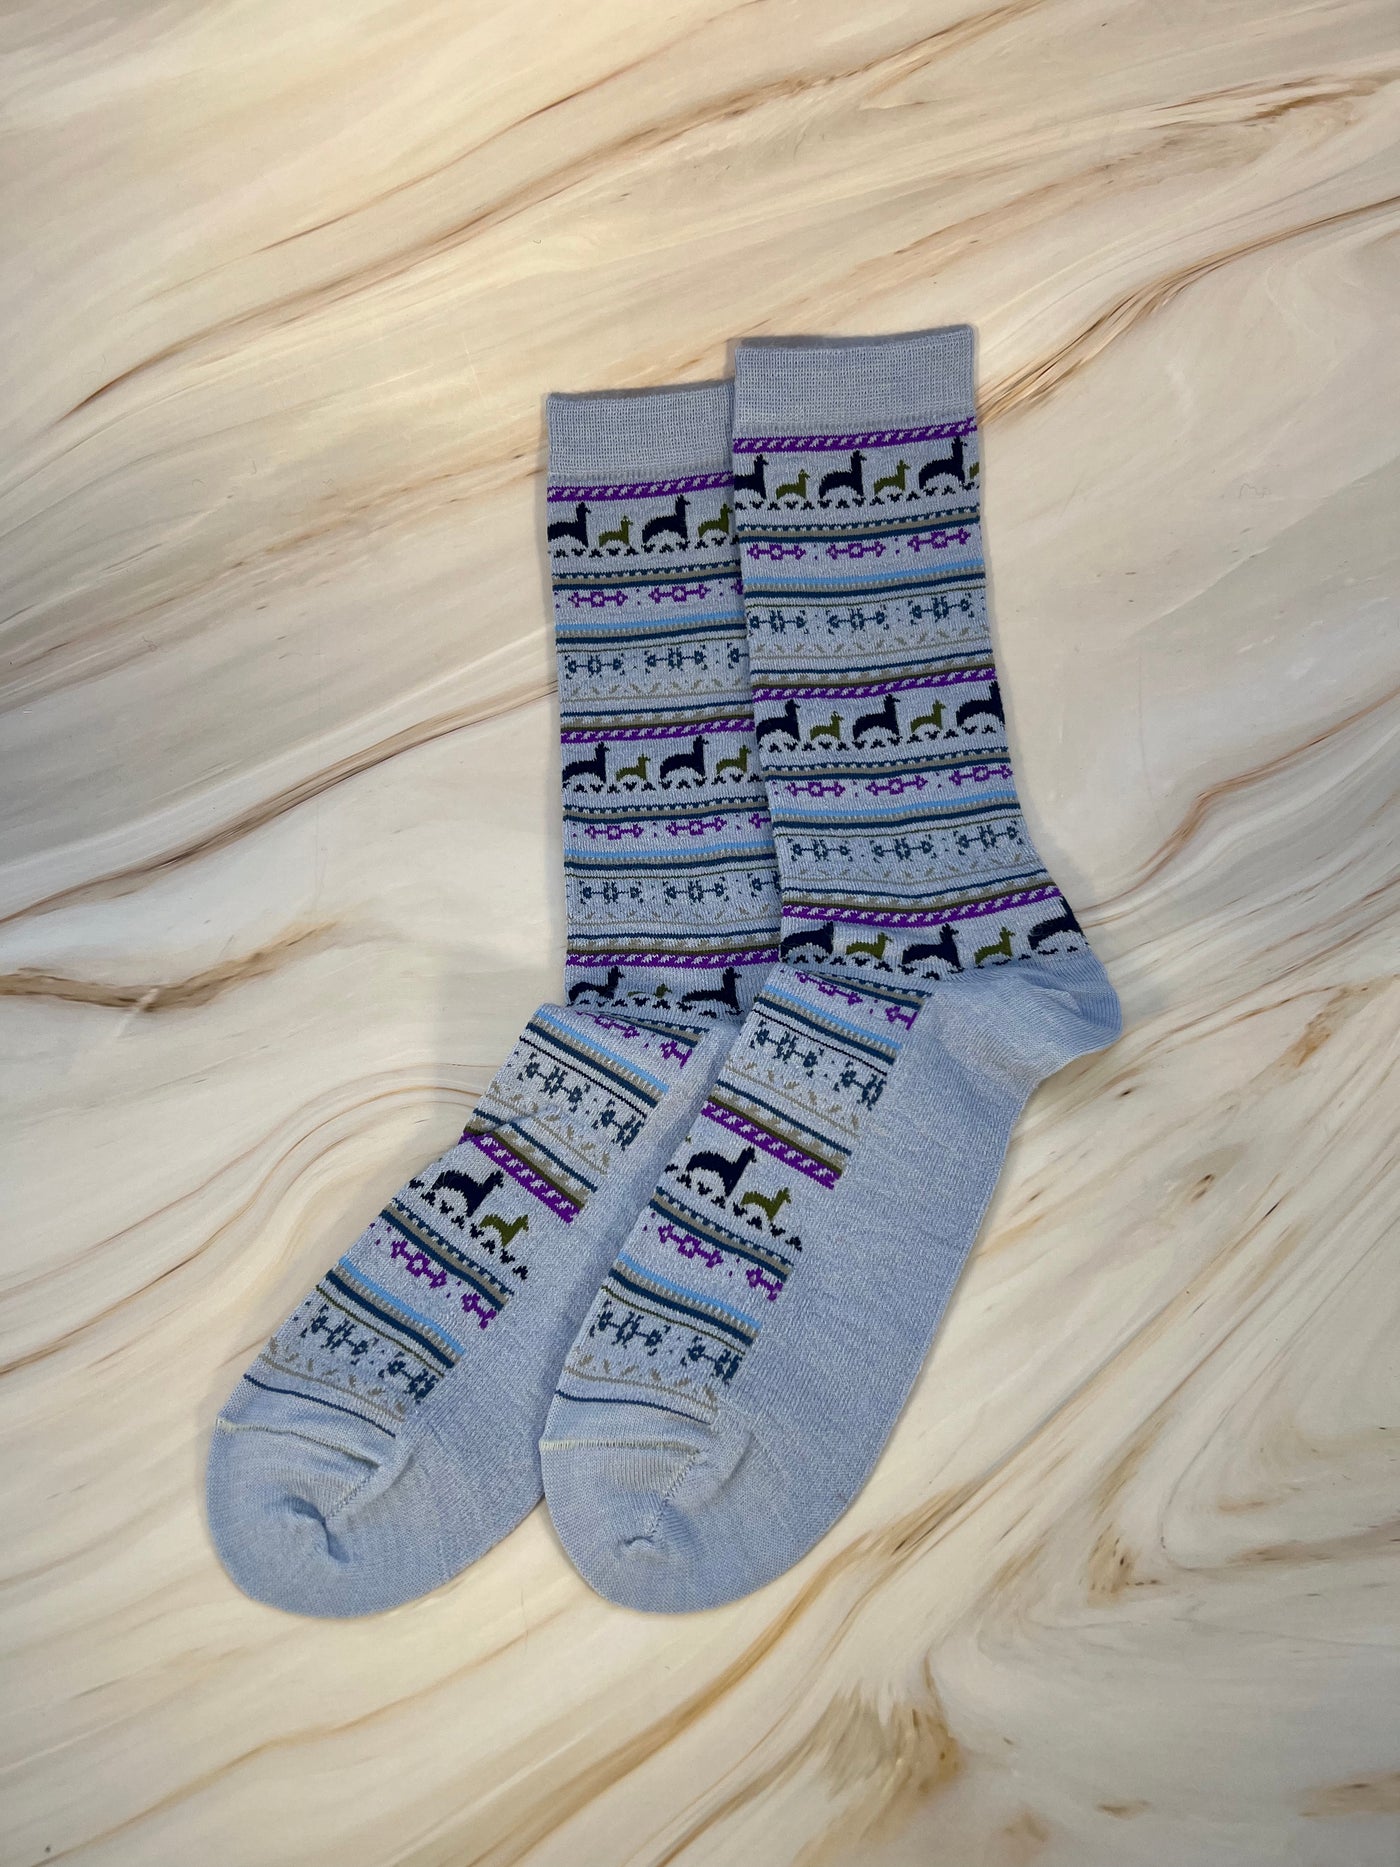 Alpaca Socks - Baby Alpaca & Eucalyptus. Upgrade your sock drawer